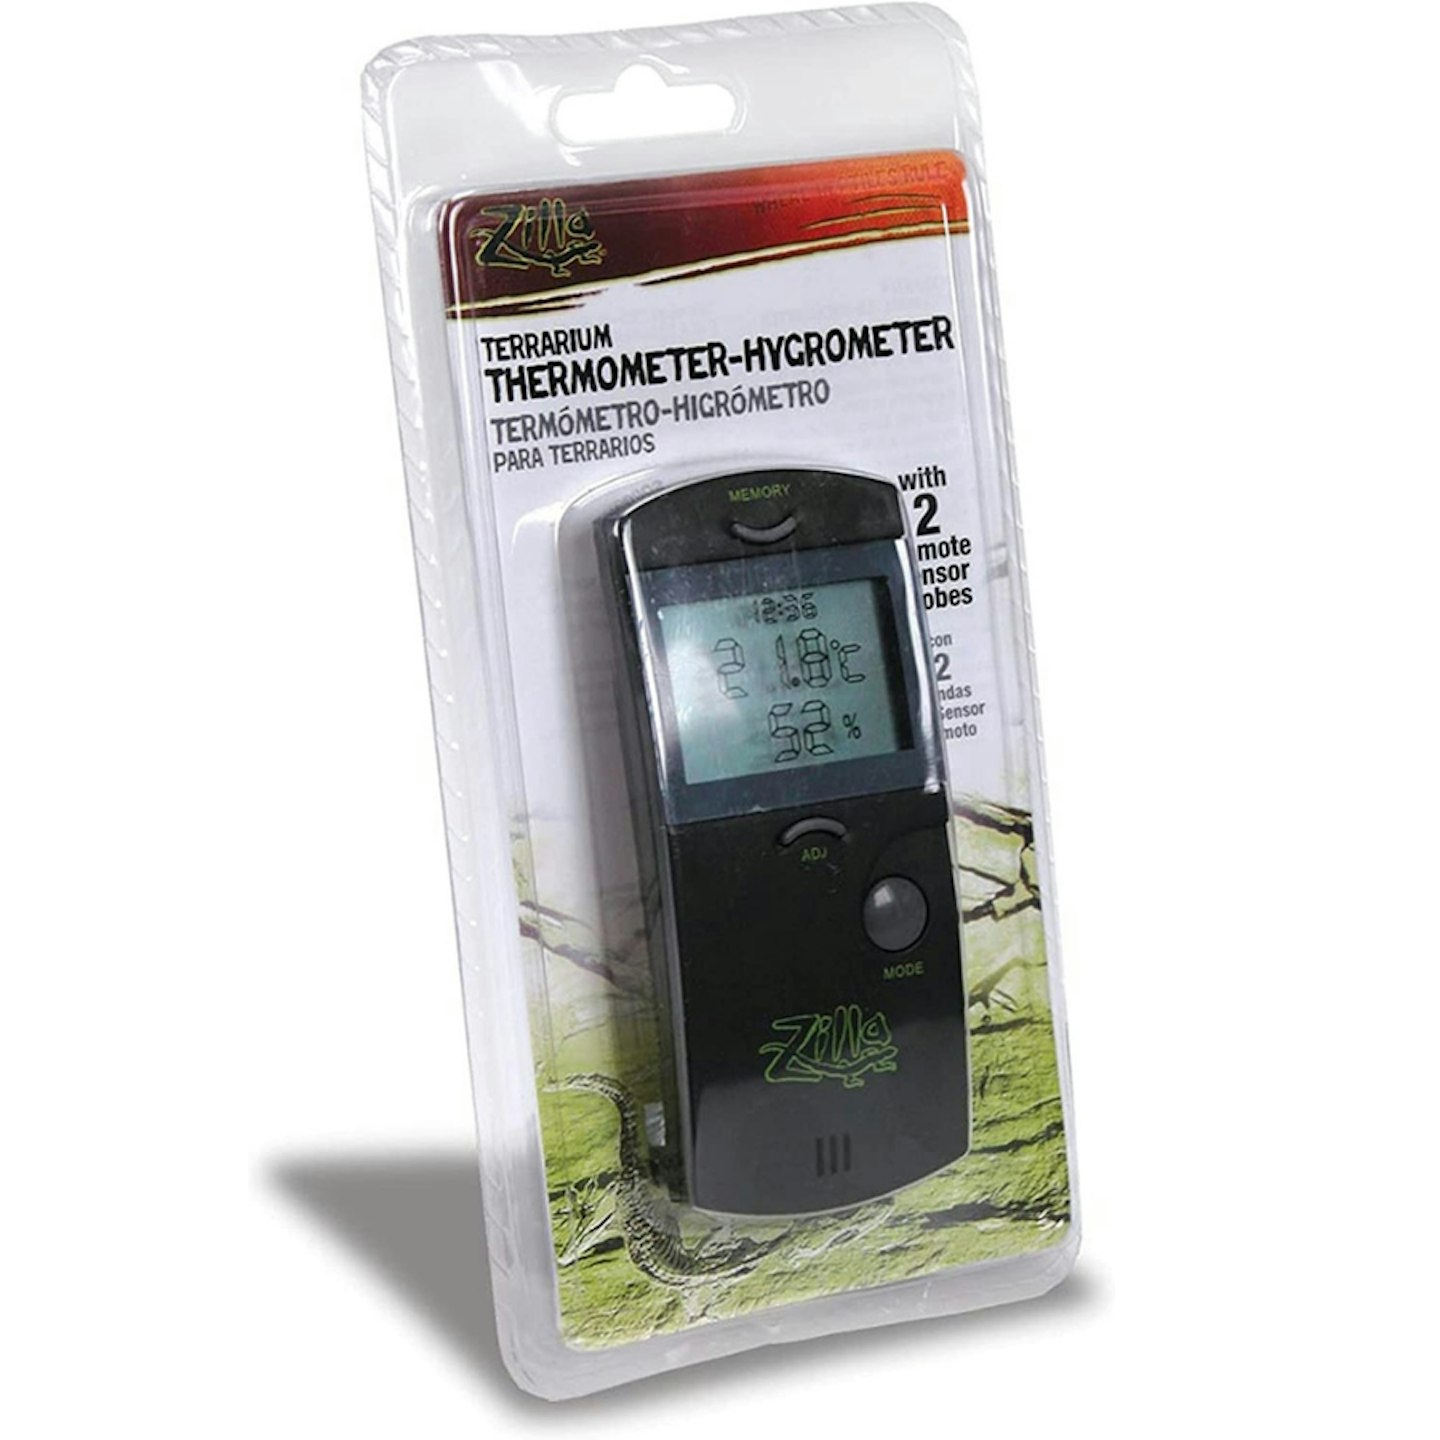 ZILLA Reptile Terrarium Digital Thermometer-Hygrometer